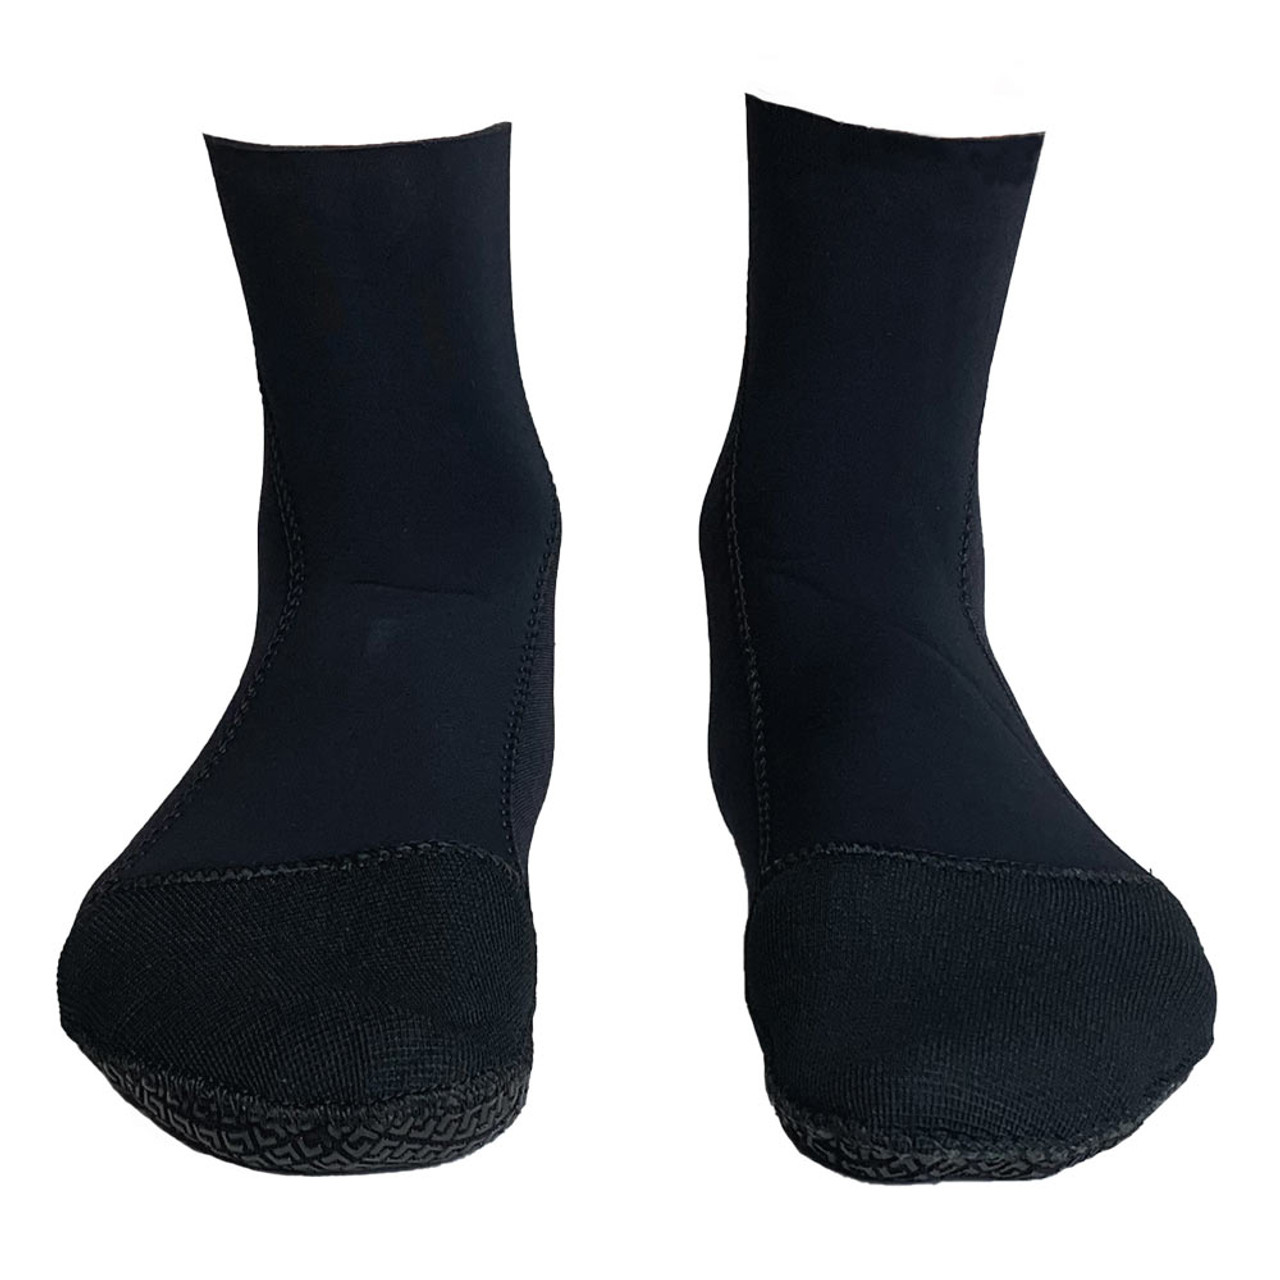 Yamamoto Neoprene Left and Right Diving Socks in 3mm / 5mm